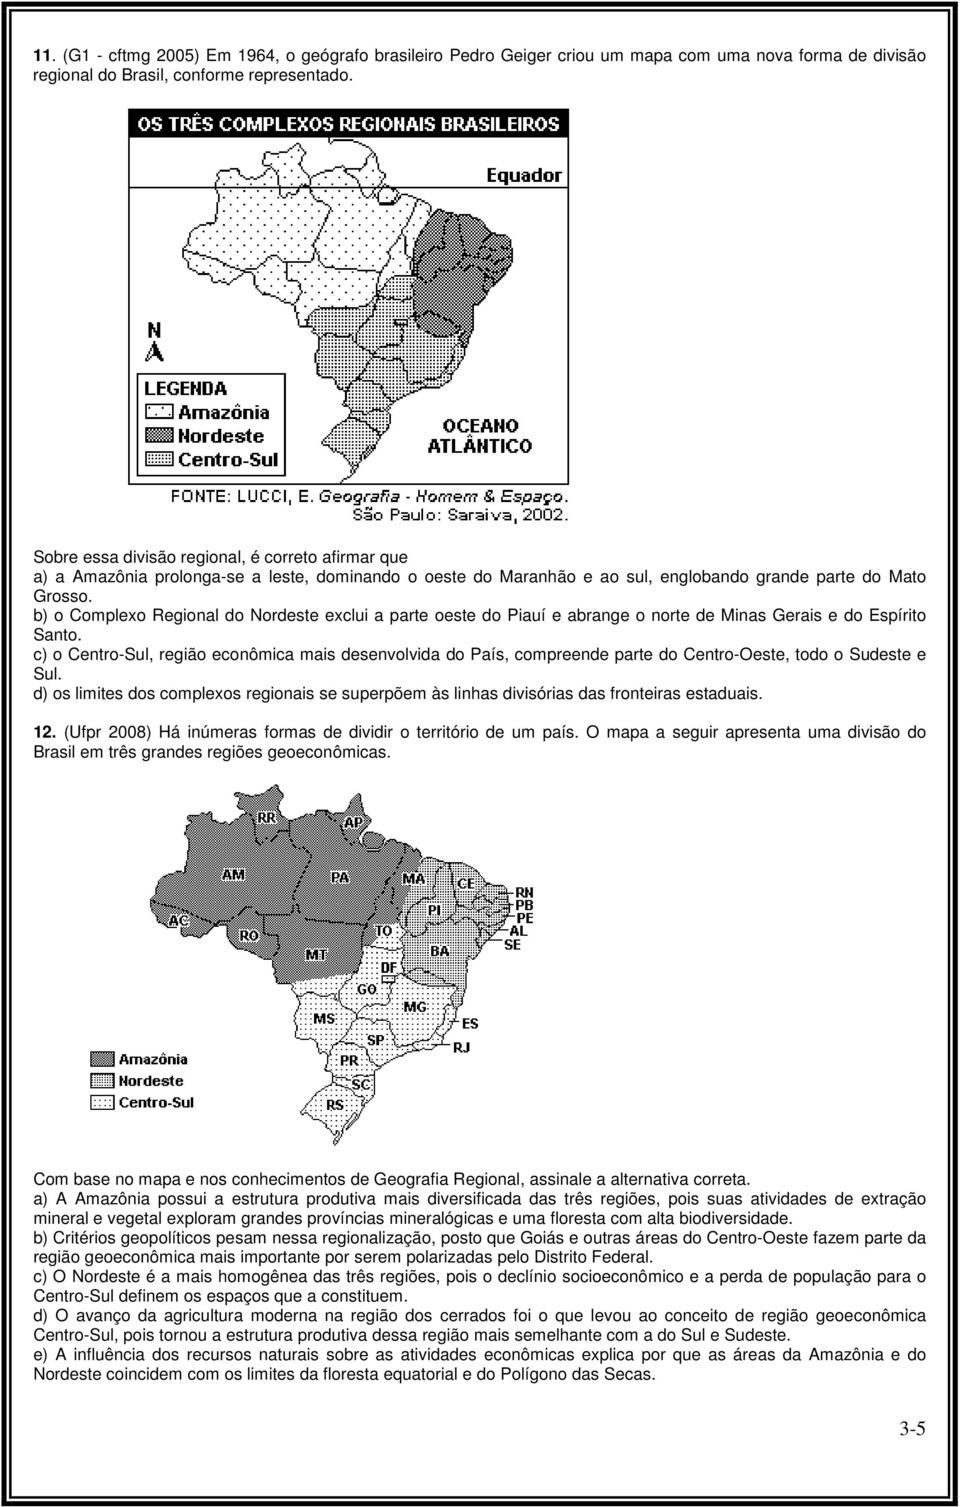 b) o Complexo Regional do Nordeste exclui a parte oeste do Piauí e abrange o norte de Minas Gerais e do Espírito Santo.